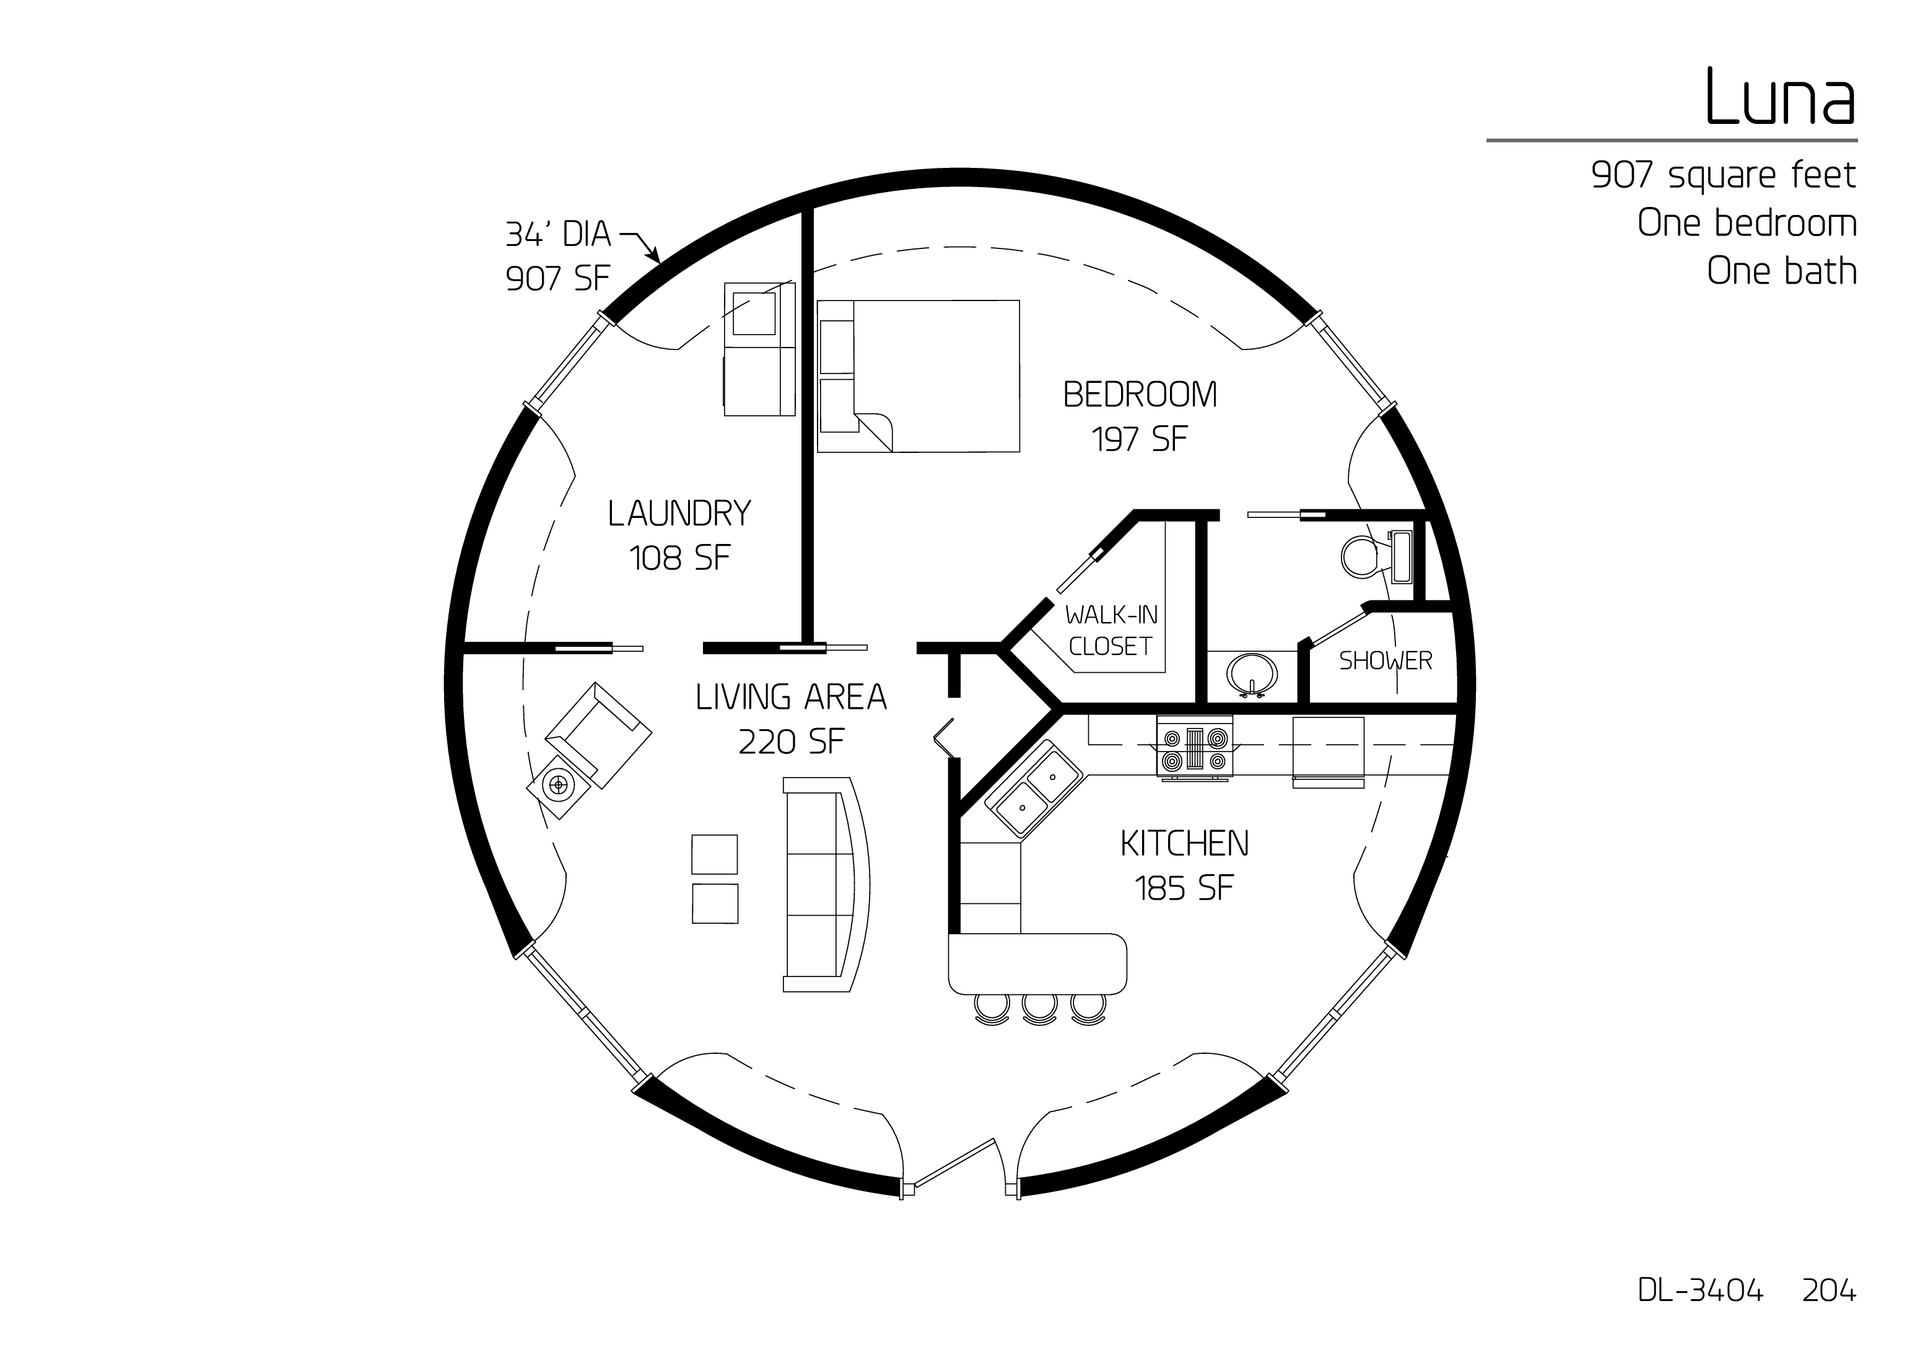 Luna: A 34' Diameter, 907 SF, One-bedroom, One-Bath Floor Plan.